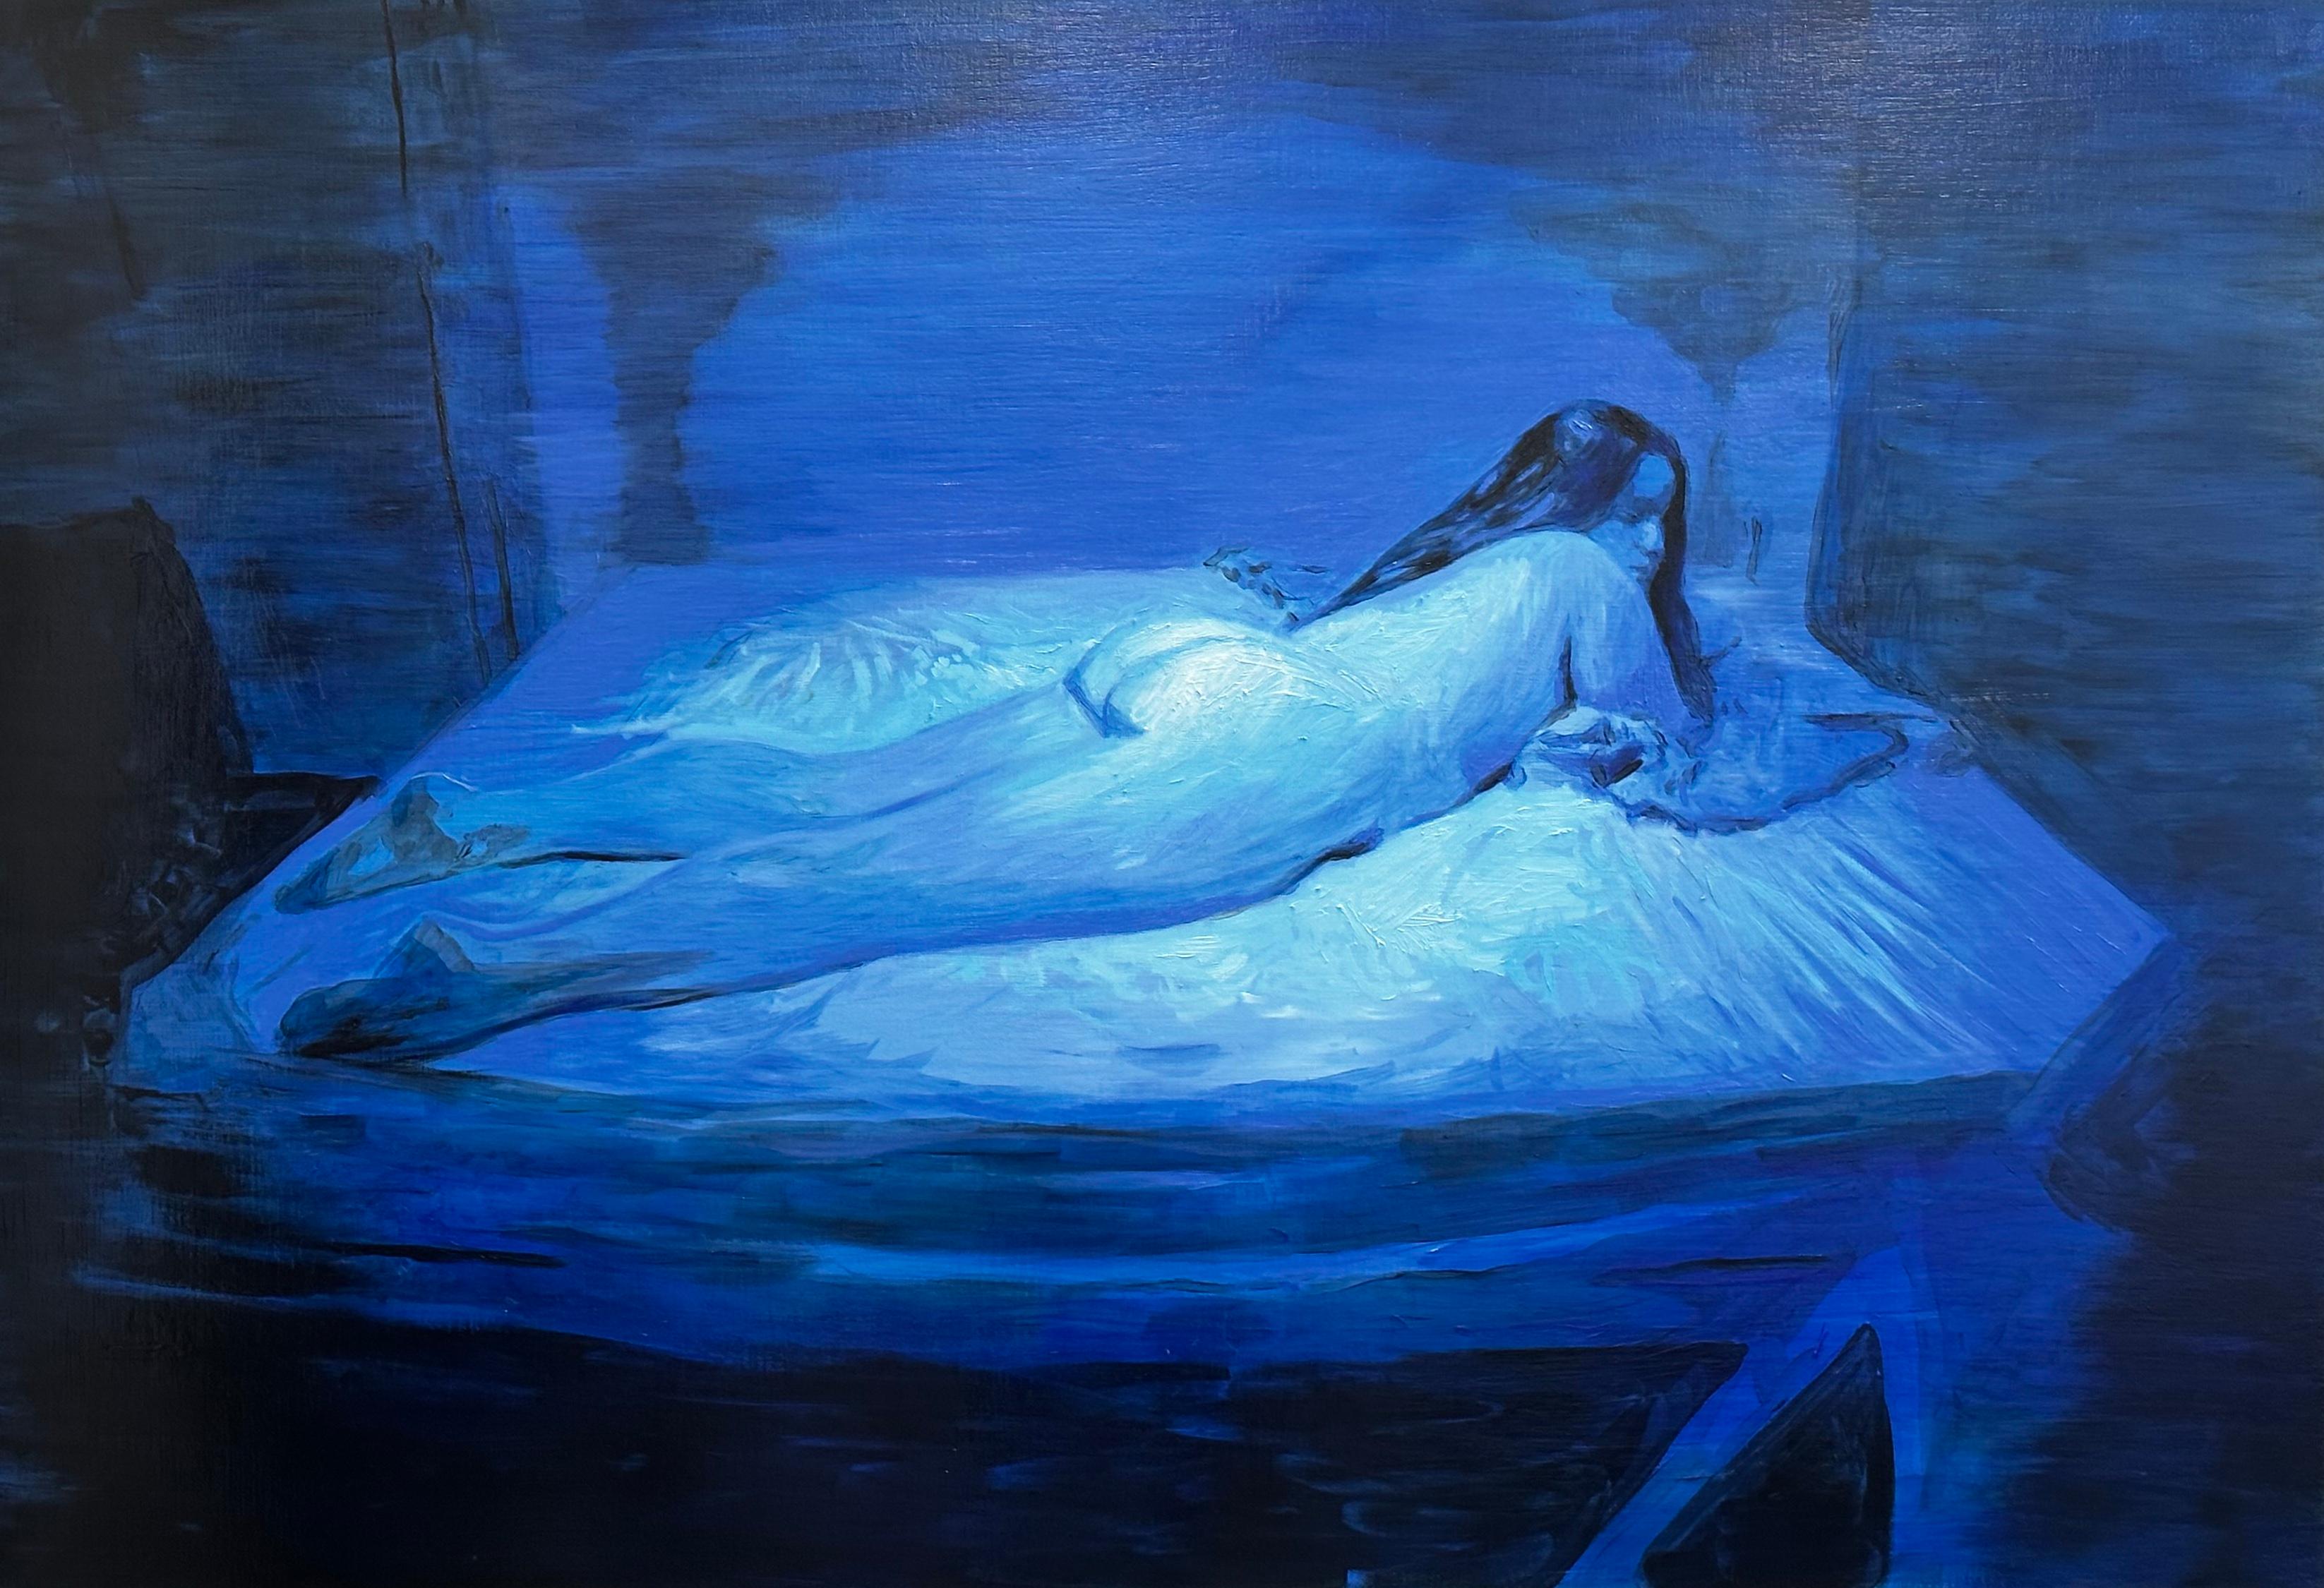 Nicolás Guzmán Nude Painting - Untitled - Woman, nude portrait, figurative oil painting, blue & black